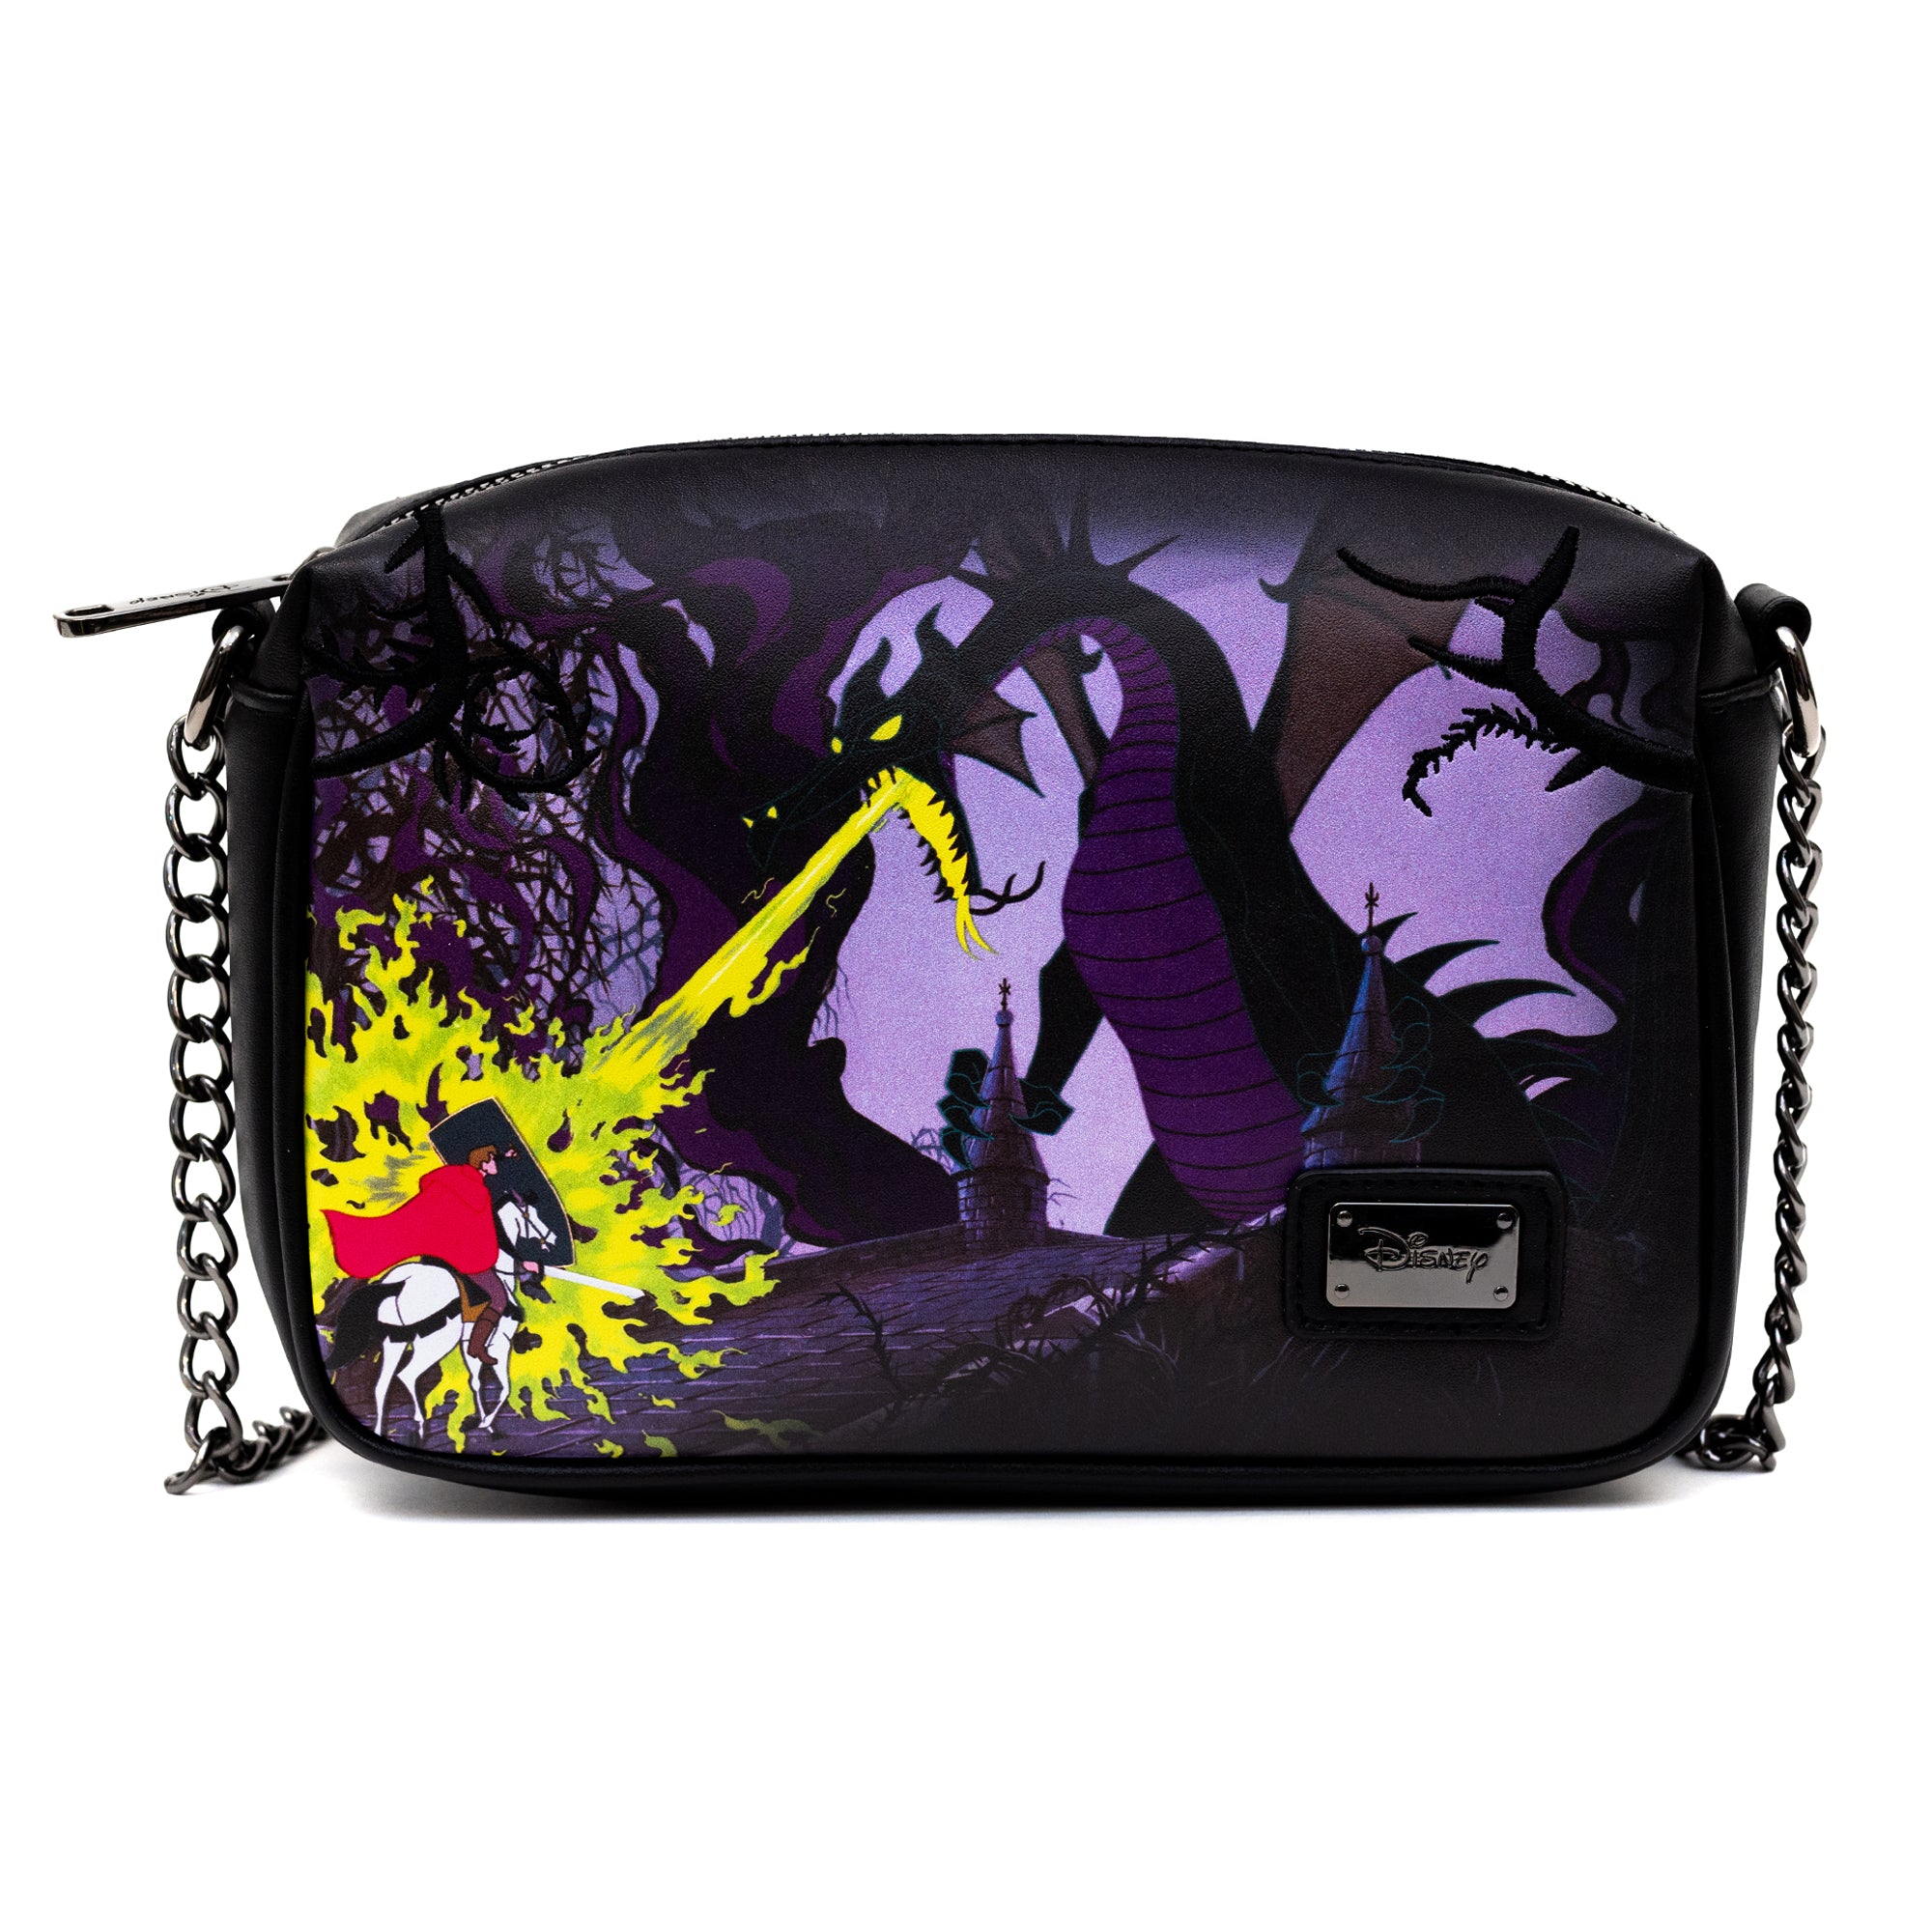 Disney Villains Sleeping Beauty Maleficent Crossbody Bag